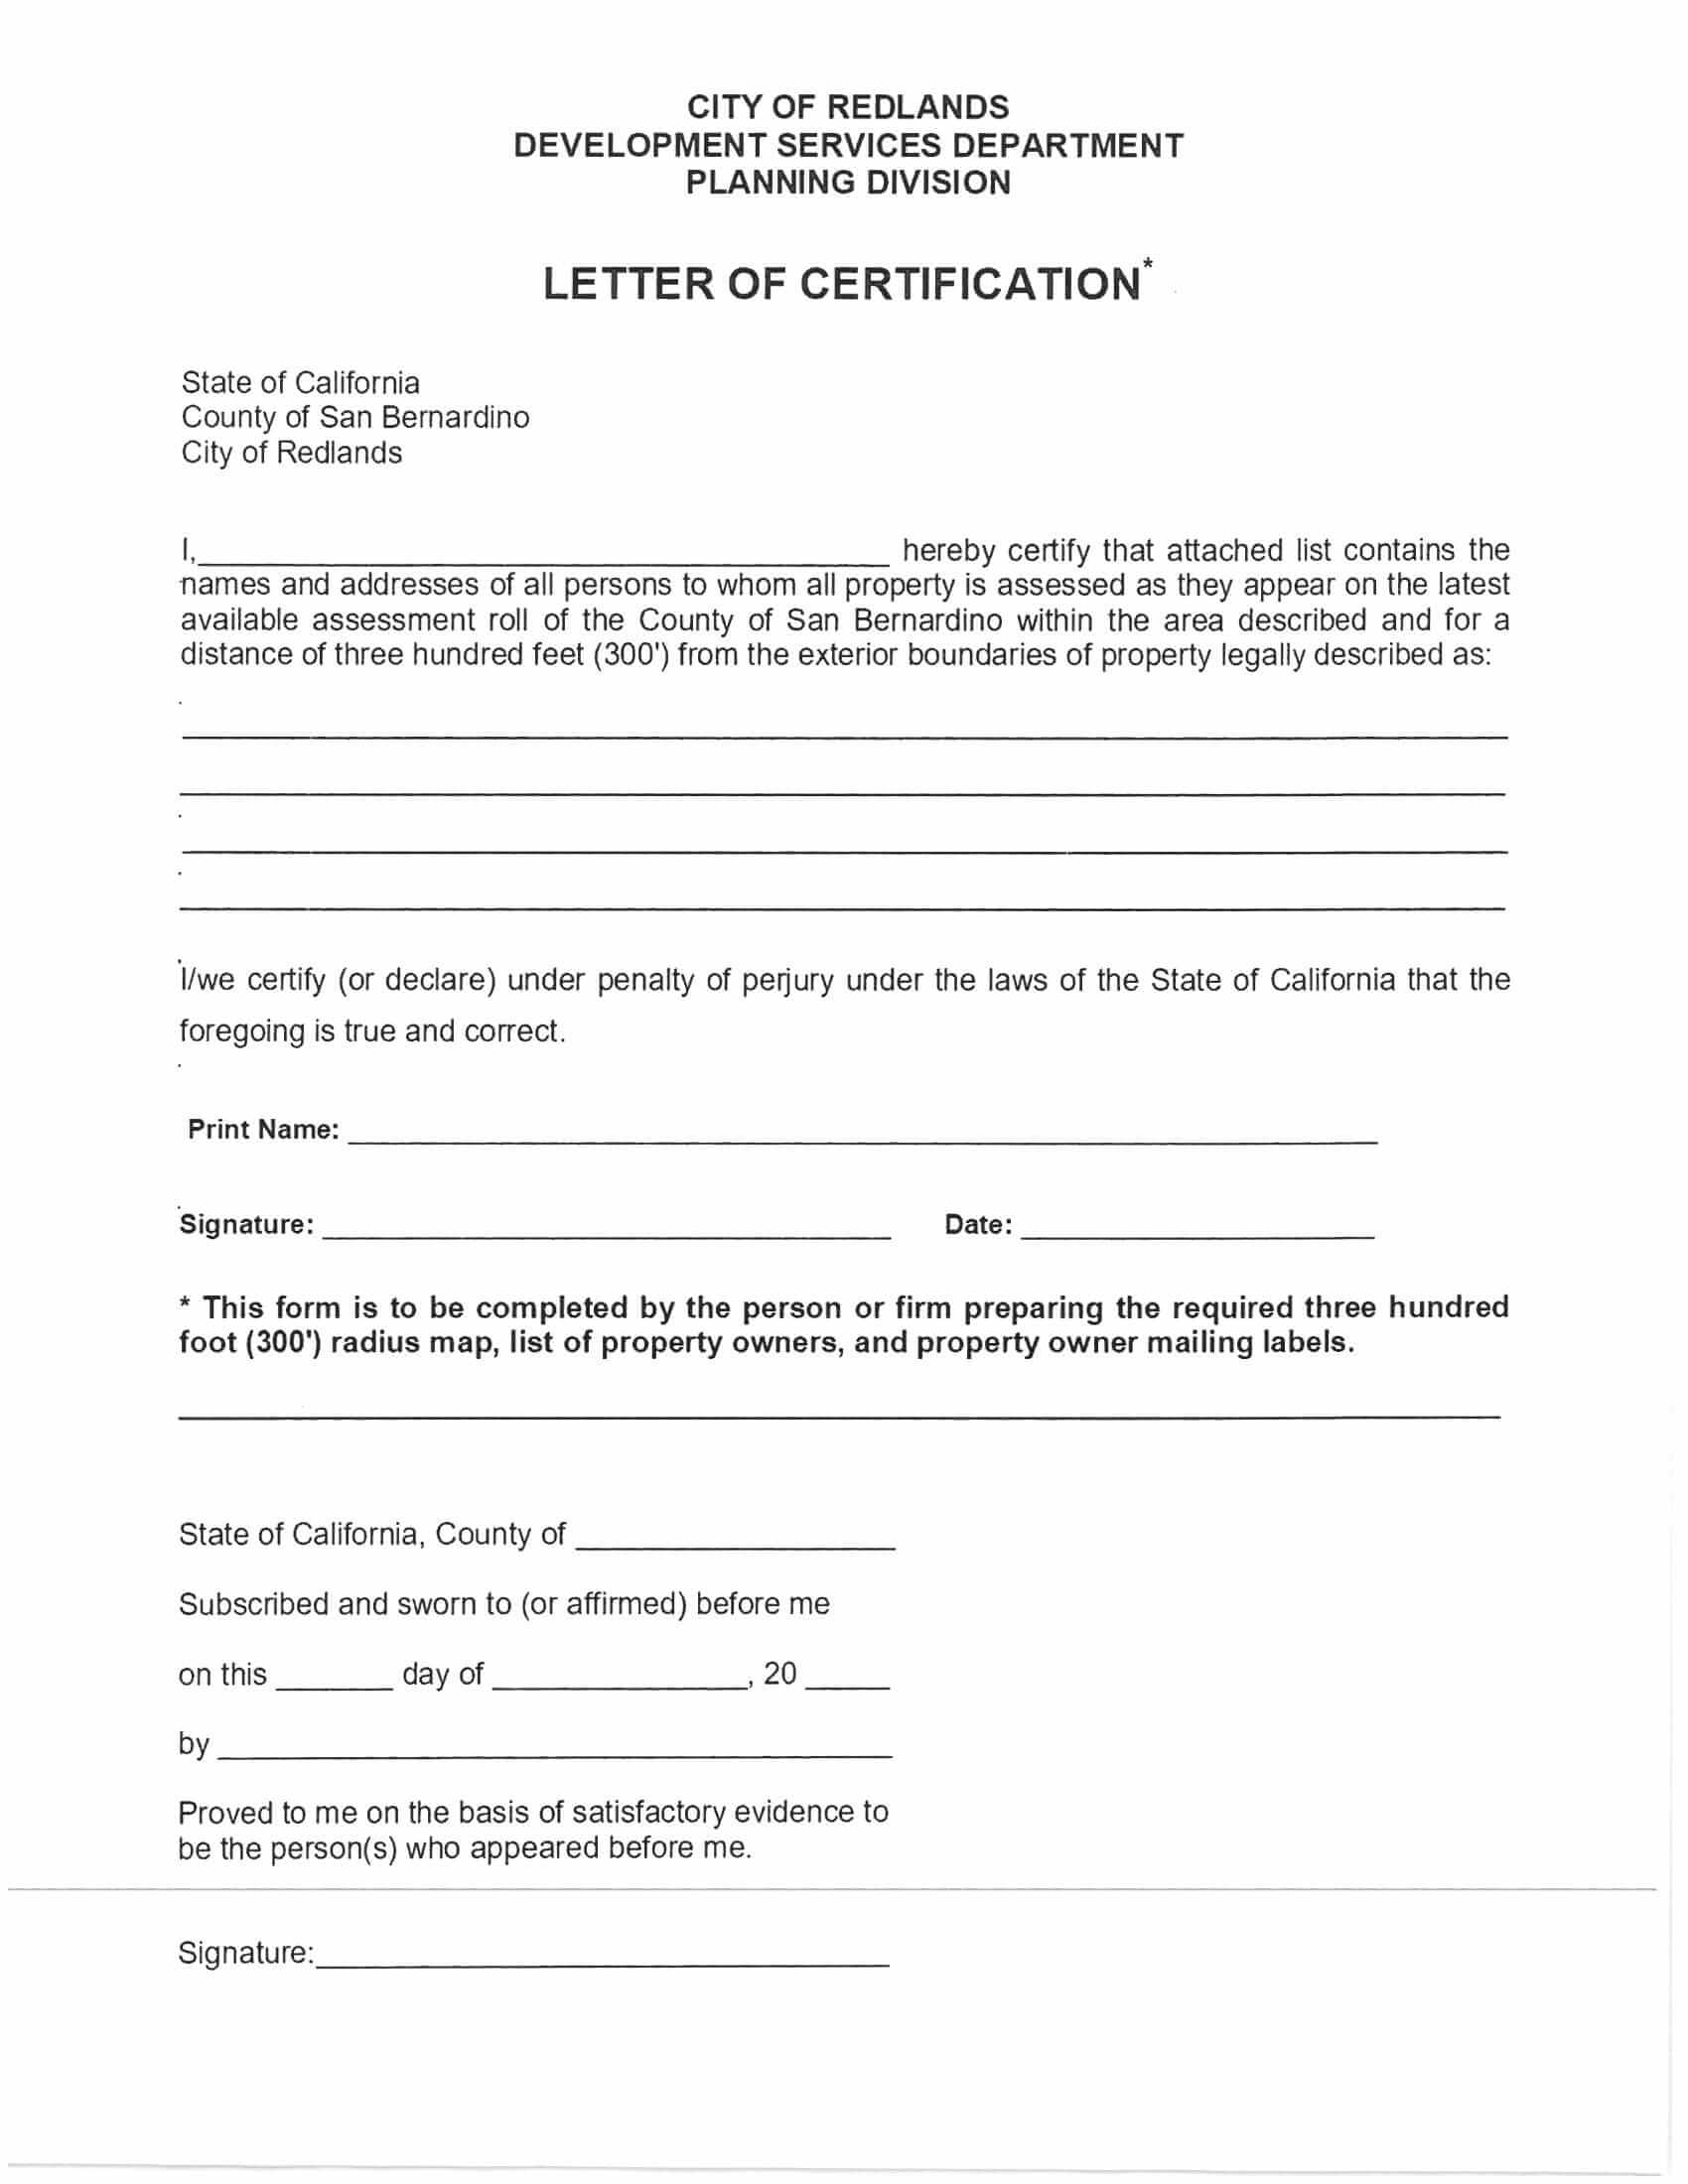 City of Redlands Community Development Department Planning Division Letter of Certification